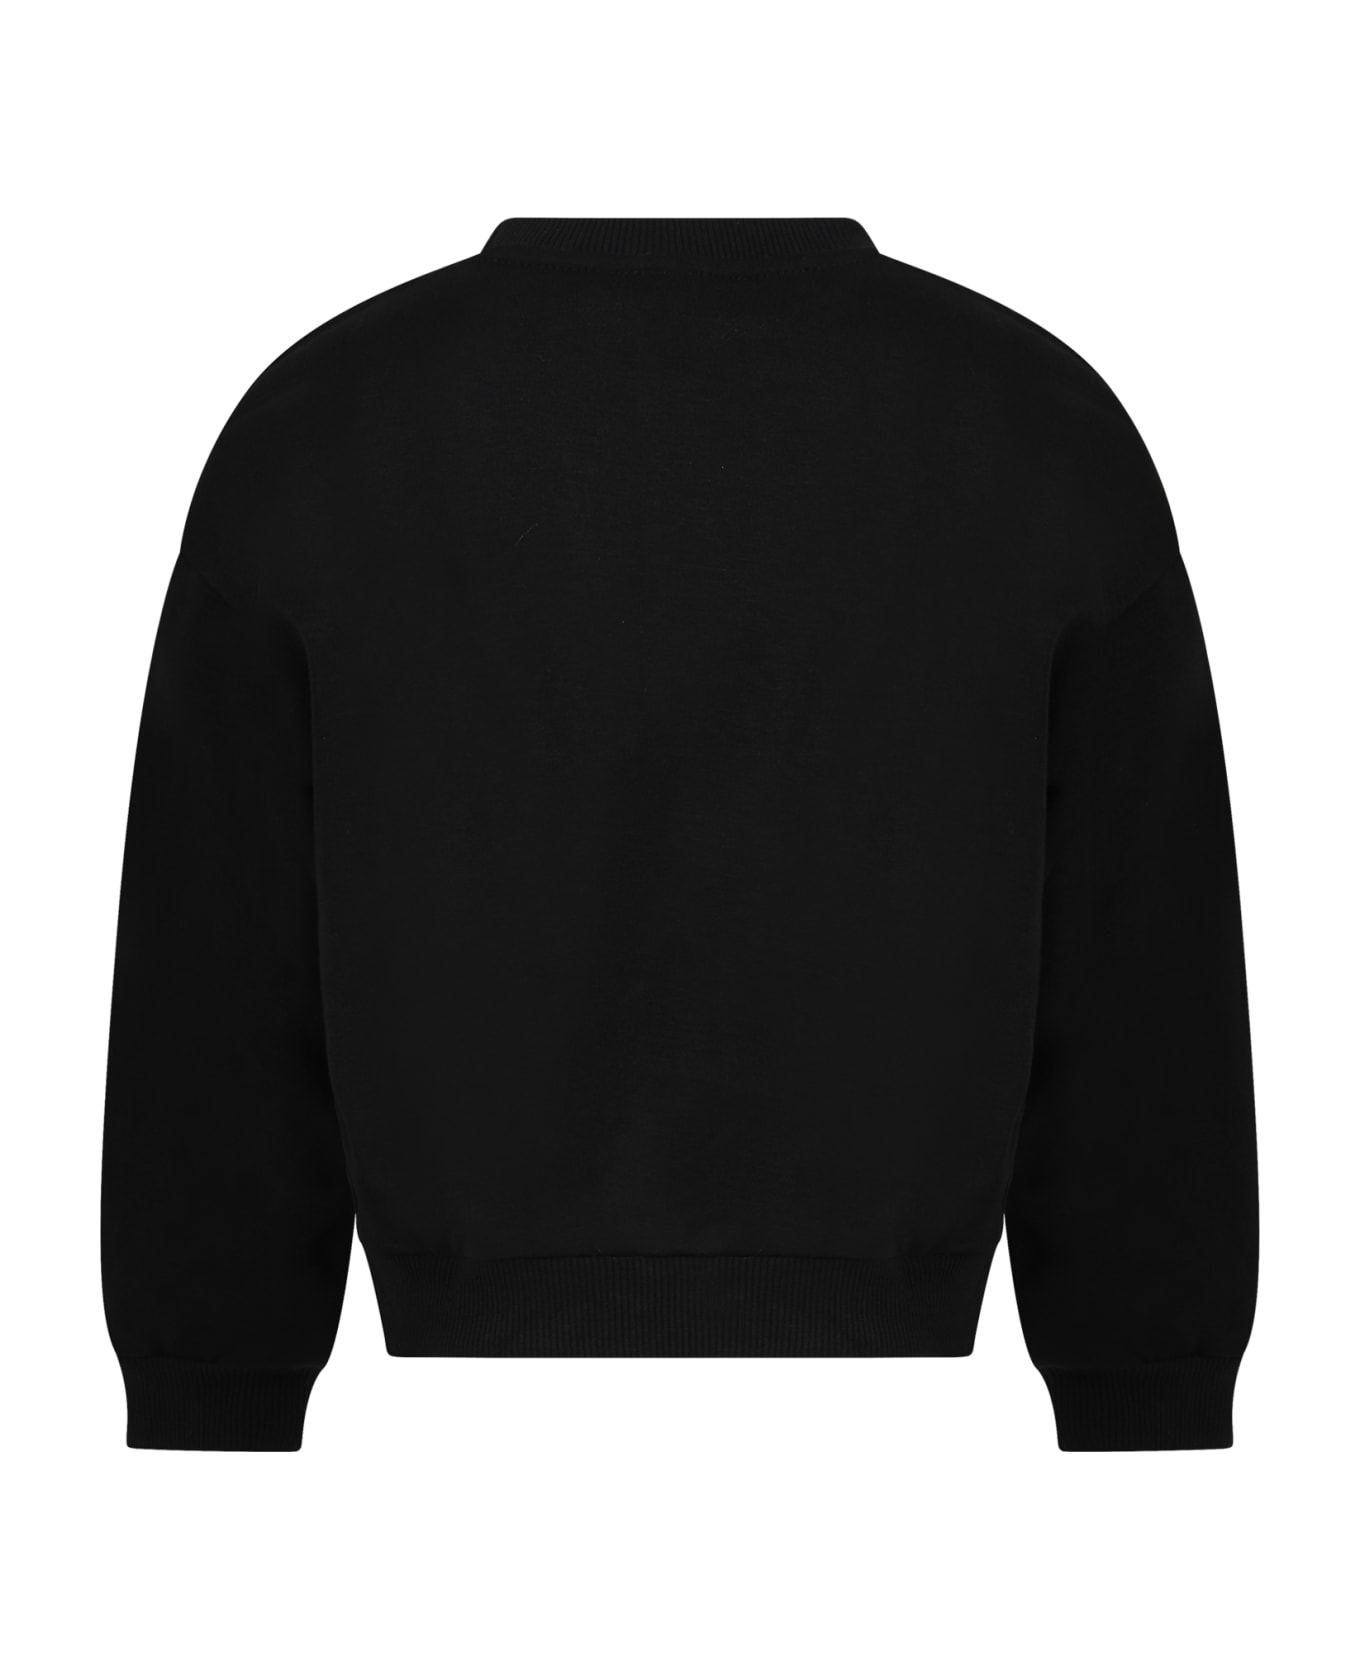 Nike Black Sweatshirt For Boy With Logo - Black ニットウェア＆スウェットシャツ